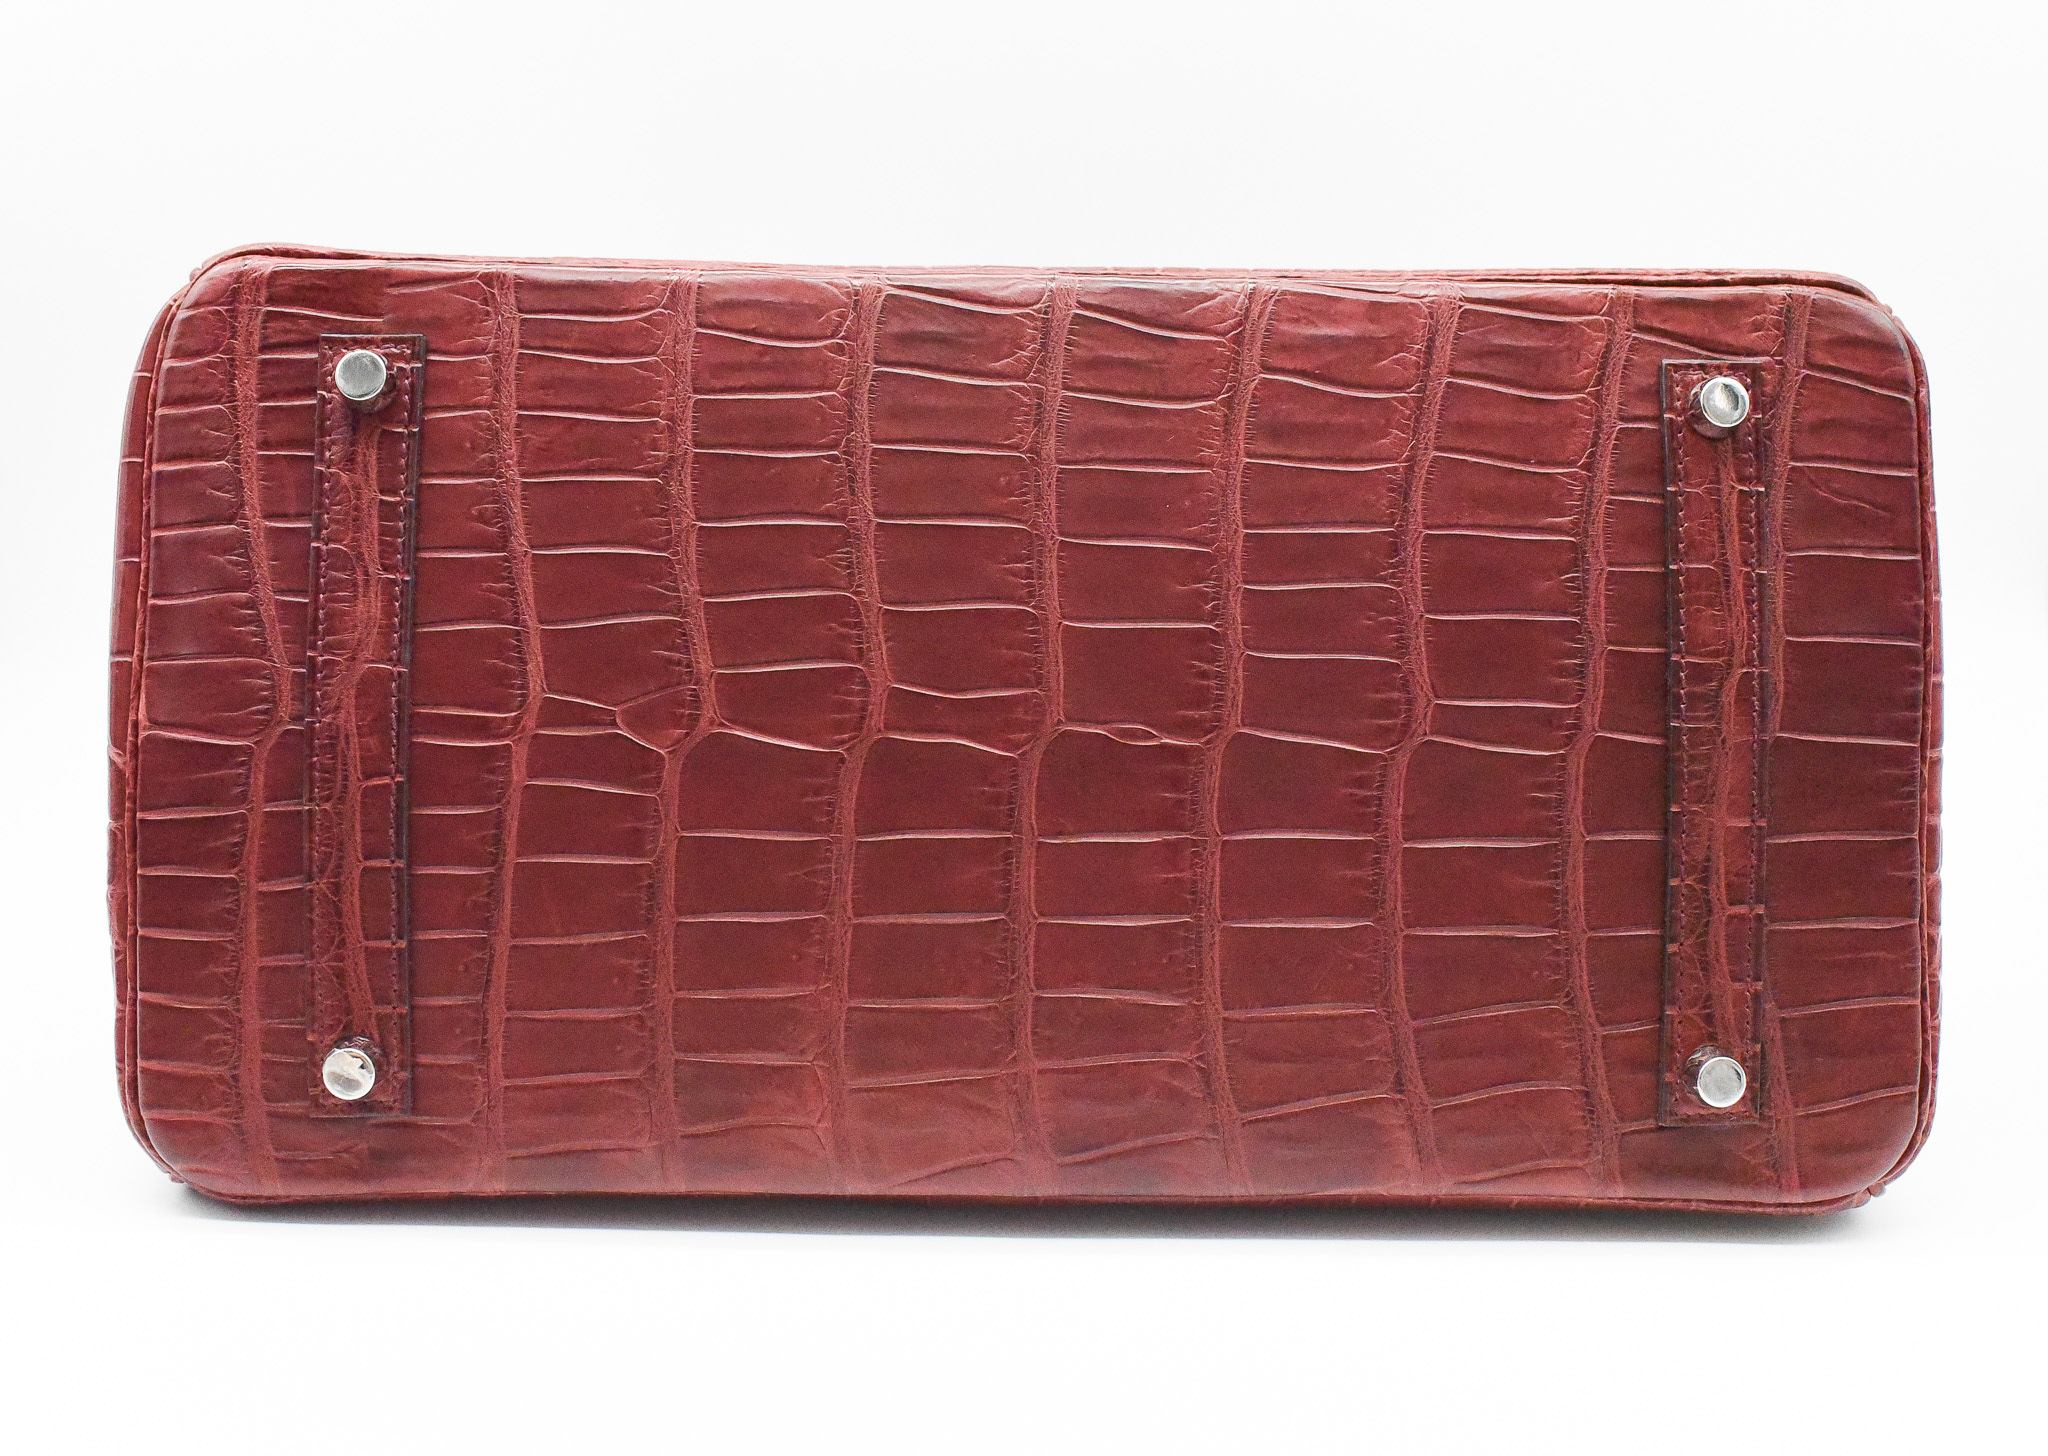 Ariadna Gutiérrez Closet Sale: Hermes Birkin 35, Red Crocodile leather with  Palladium Hardware, Preowned in Box with Cites MA004 - Julia Rose Boston